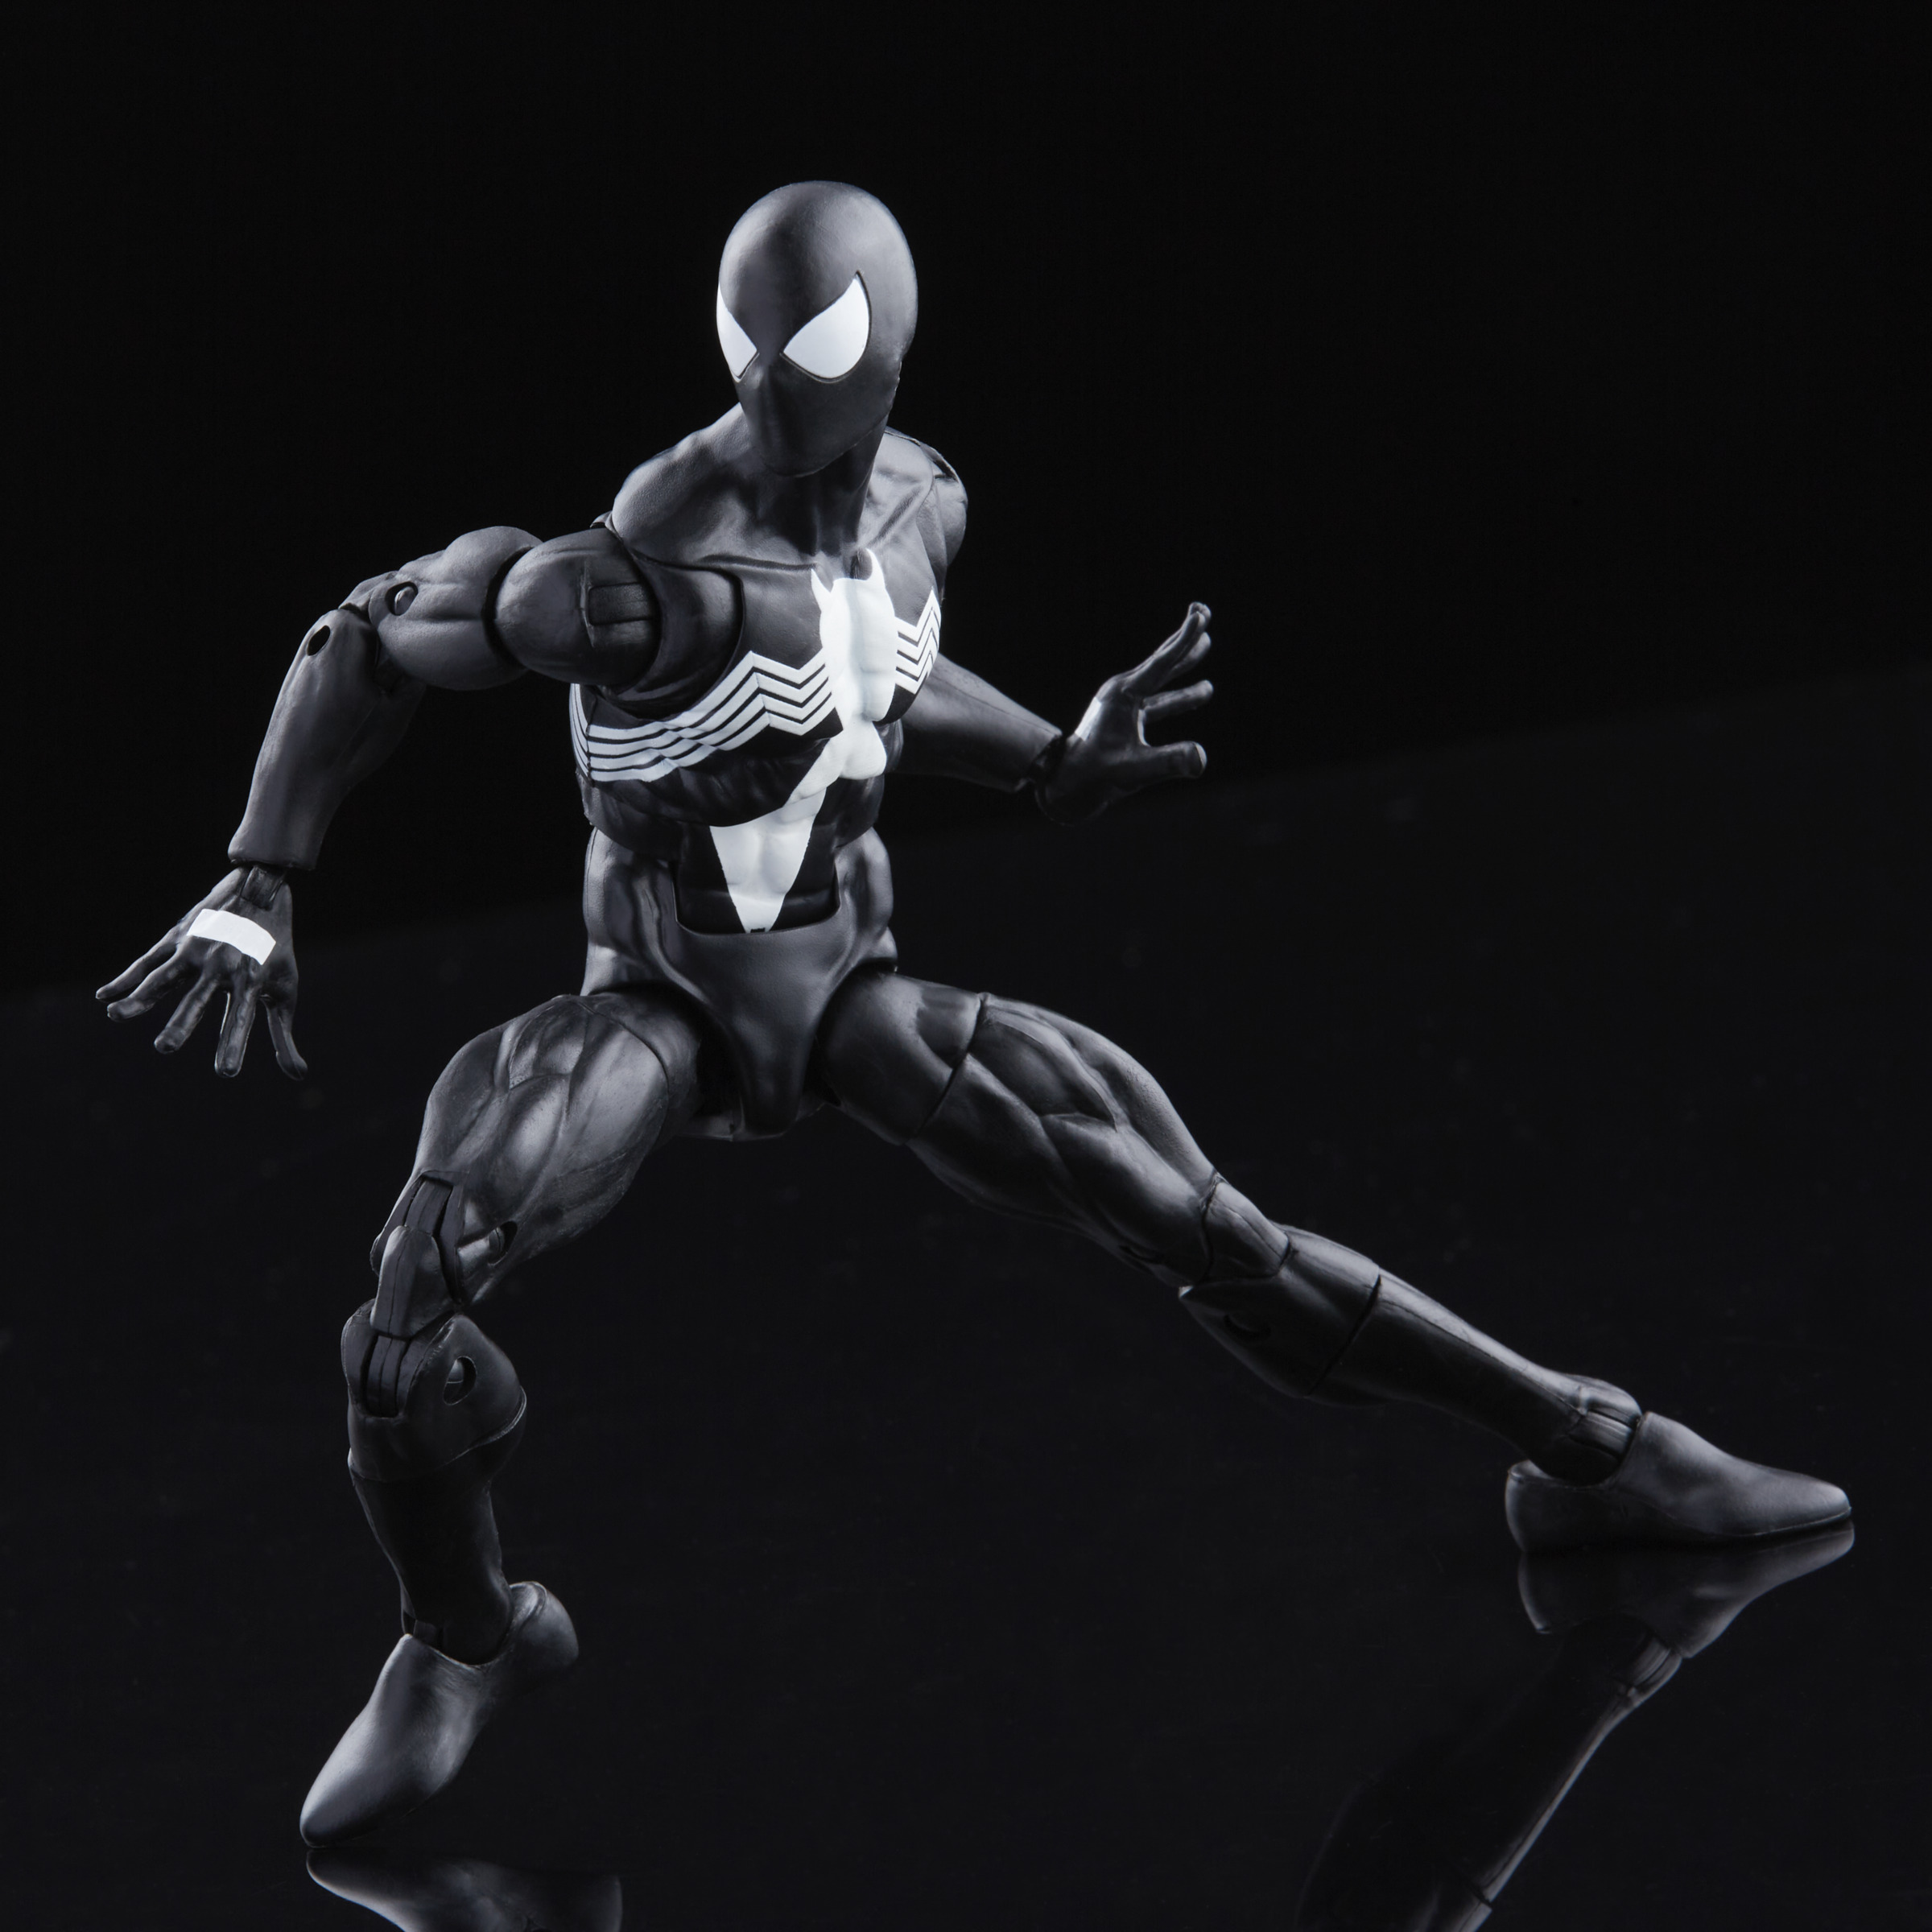 Marvel Legends Retro Collection Symbiote Spider-Man revealed